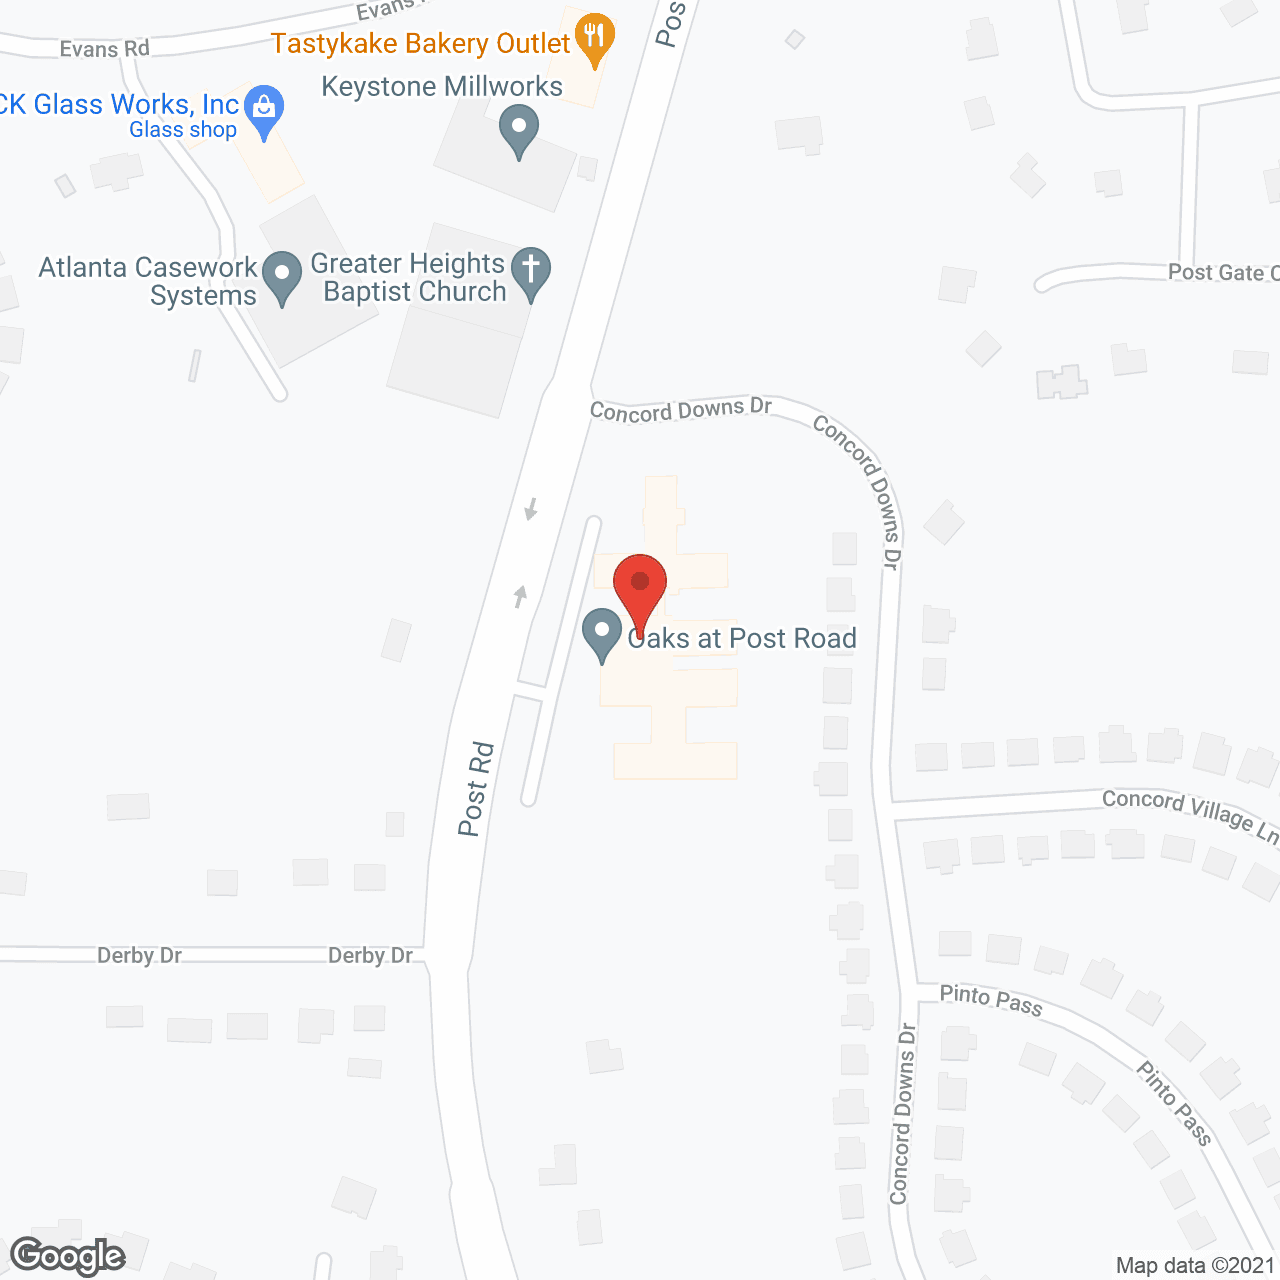 Oaks at Post Road in google map